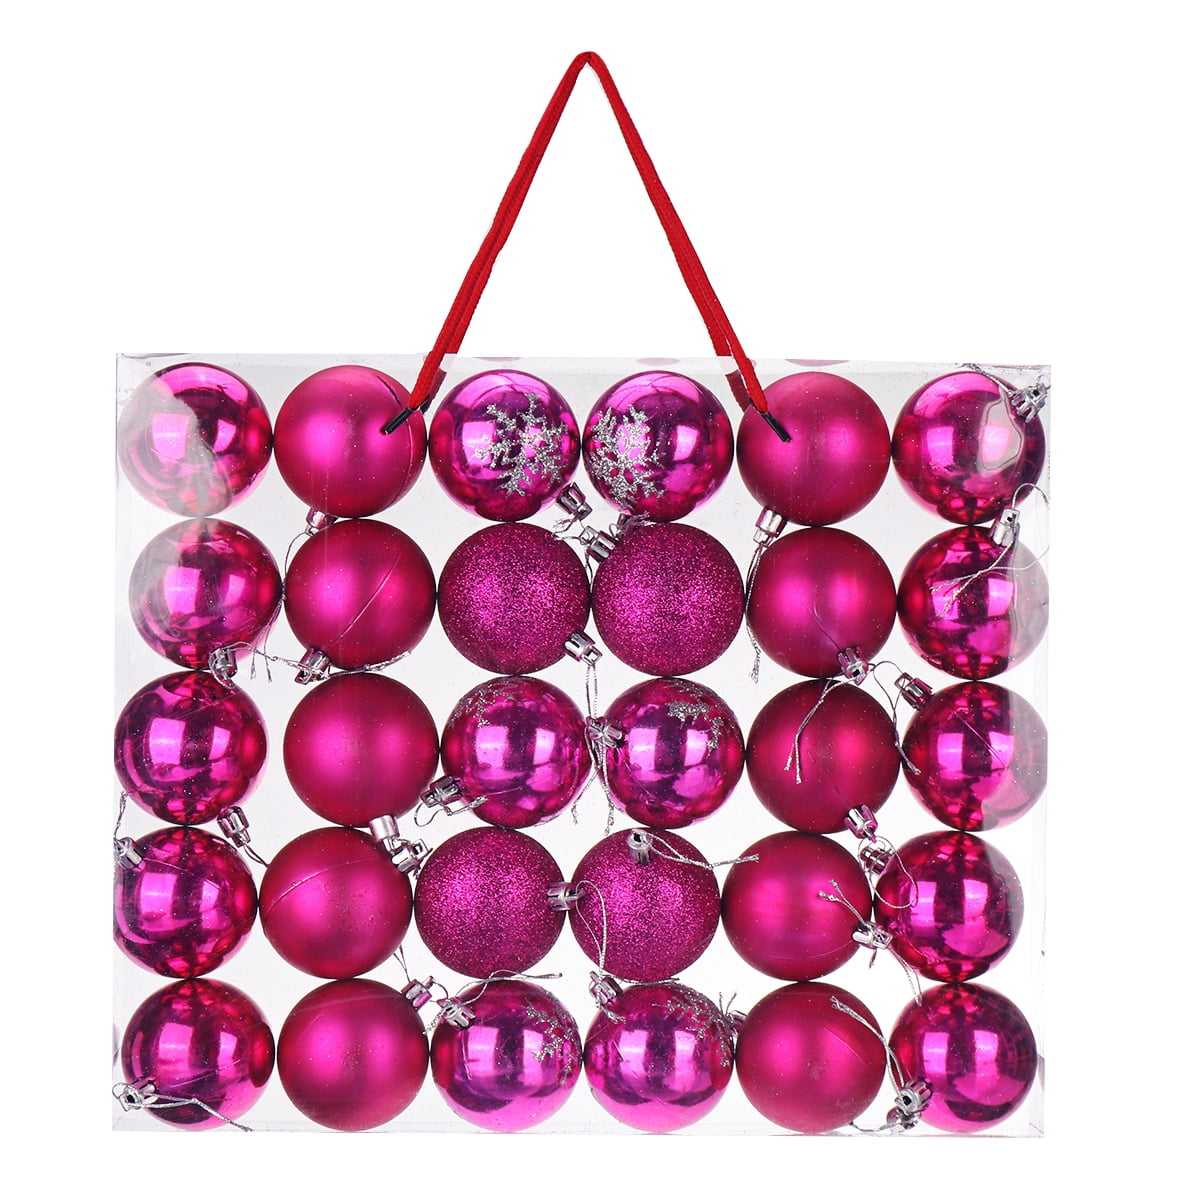 30PCS Christmas Ornaments Balls, 2.36" Shatterproof Christmas Ornaments Sets